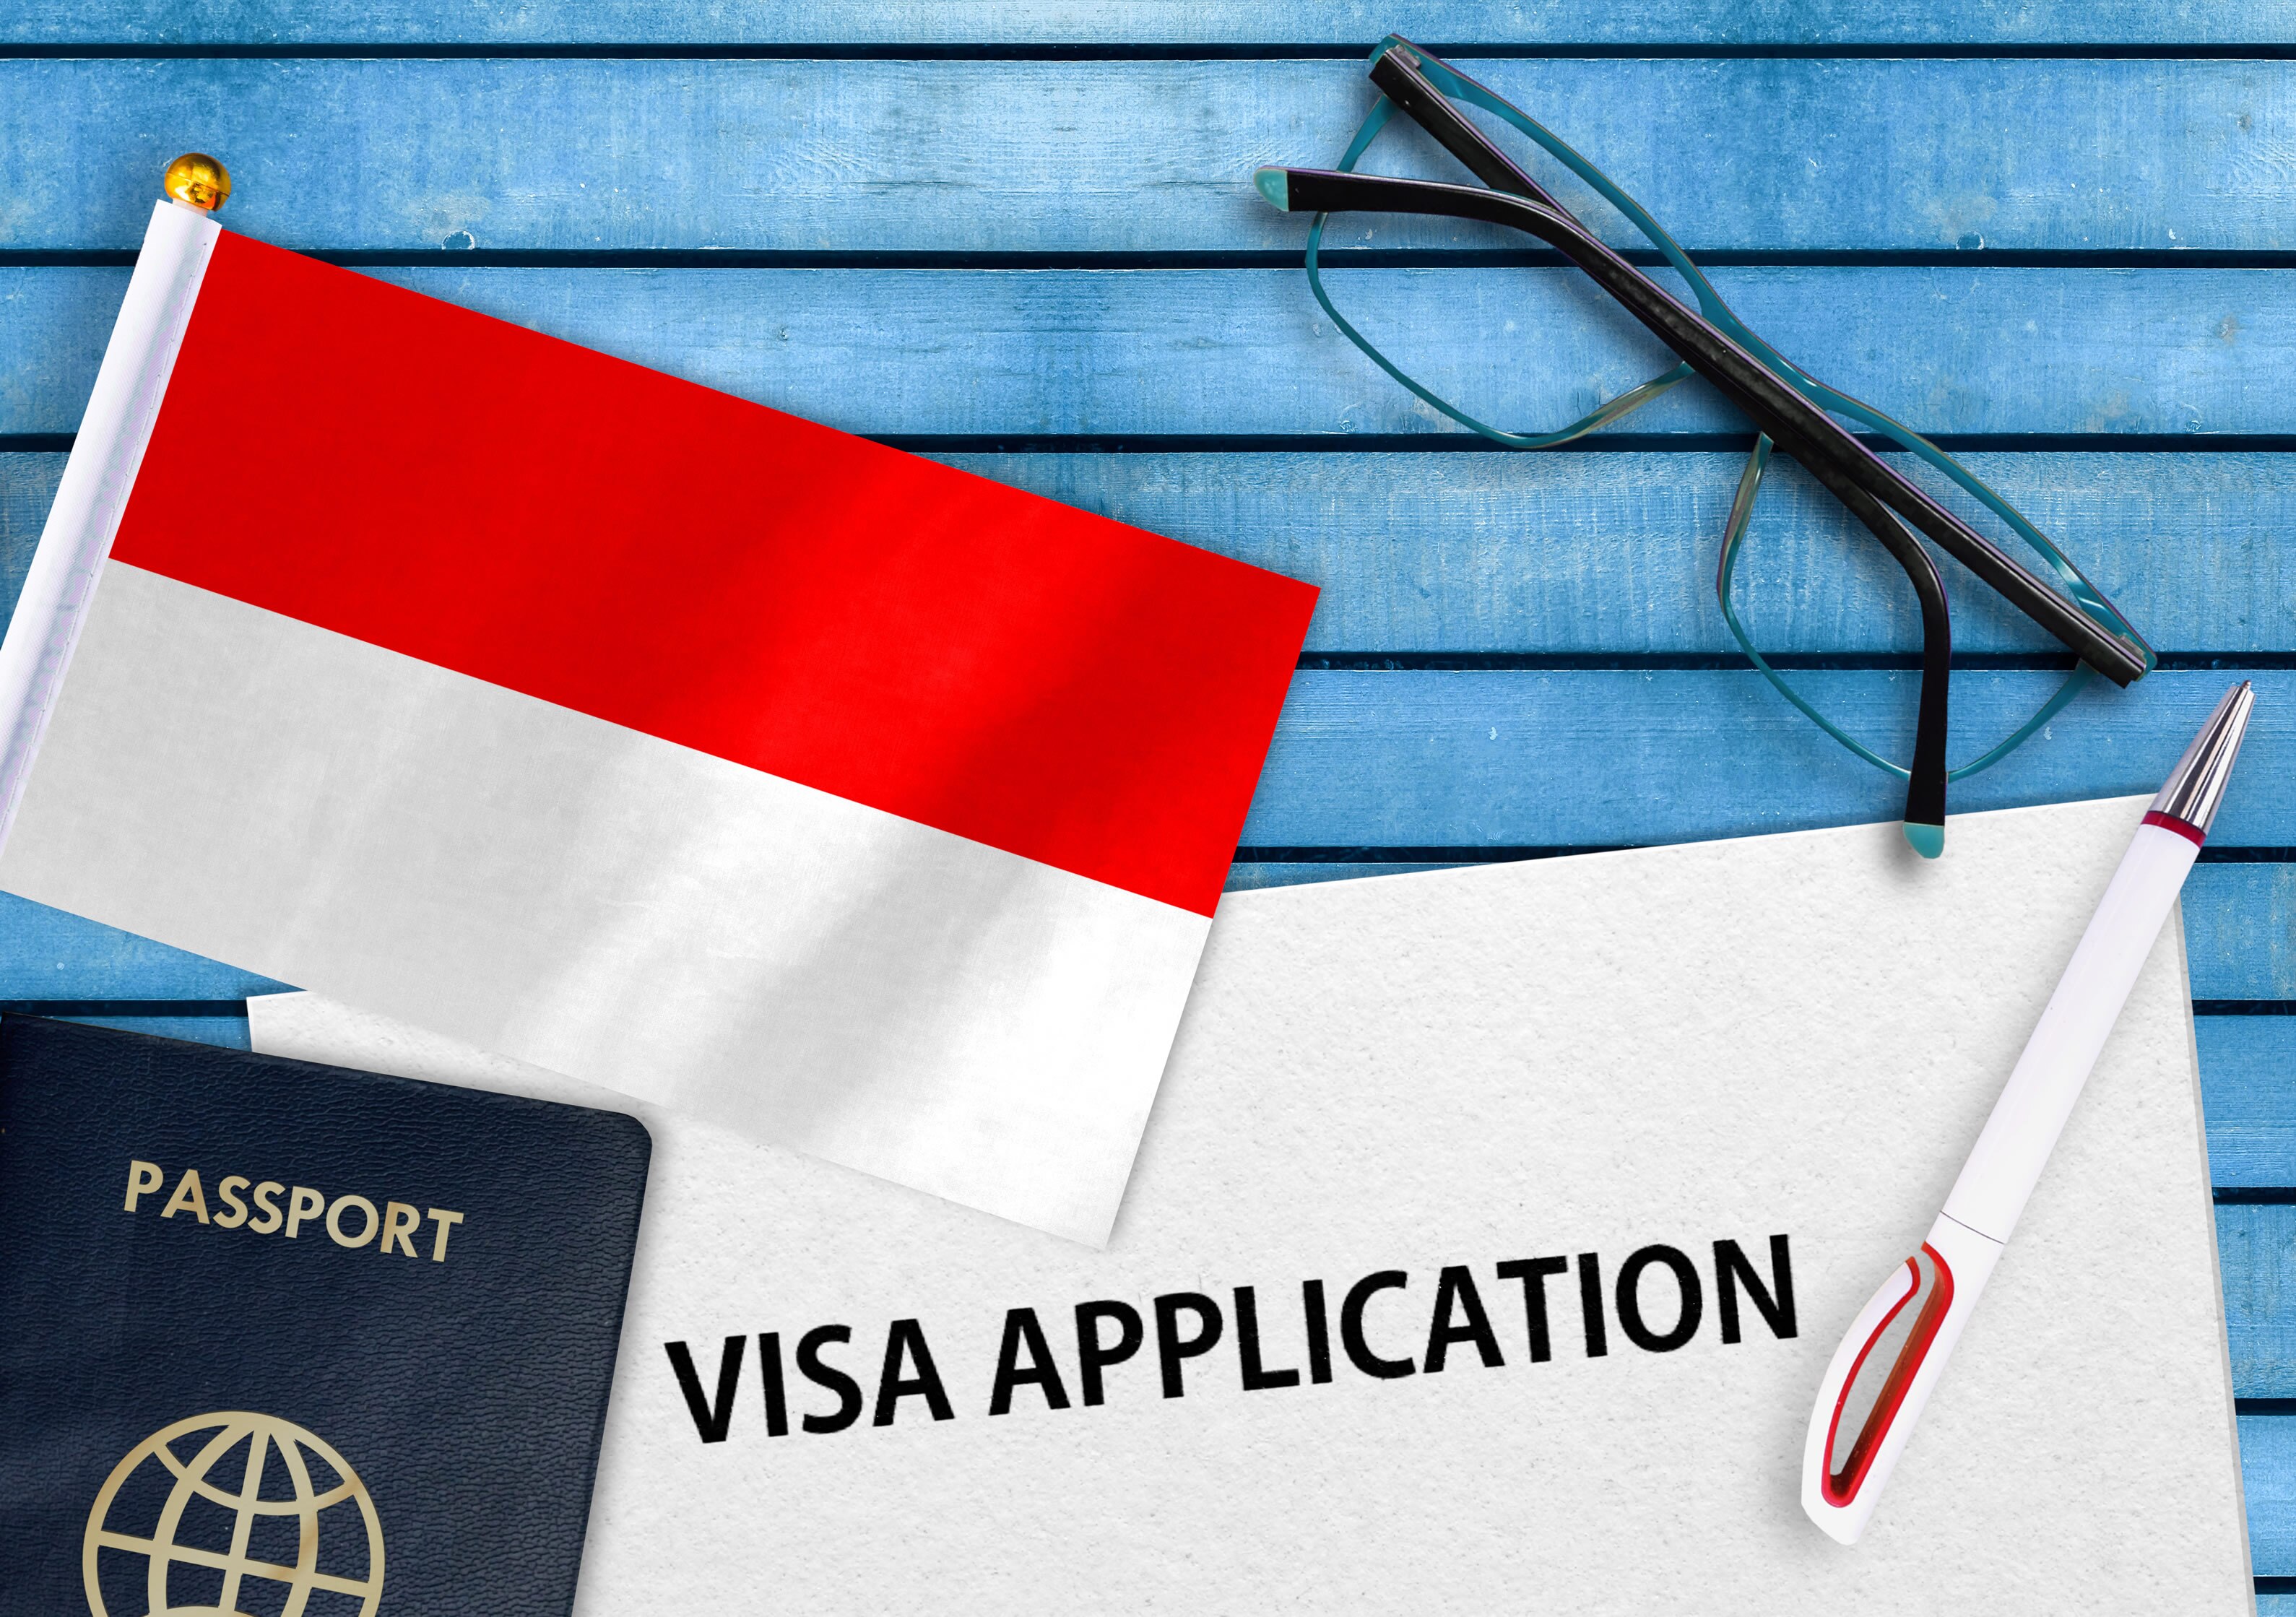 Indonesia Visa application form